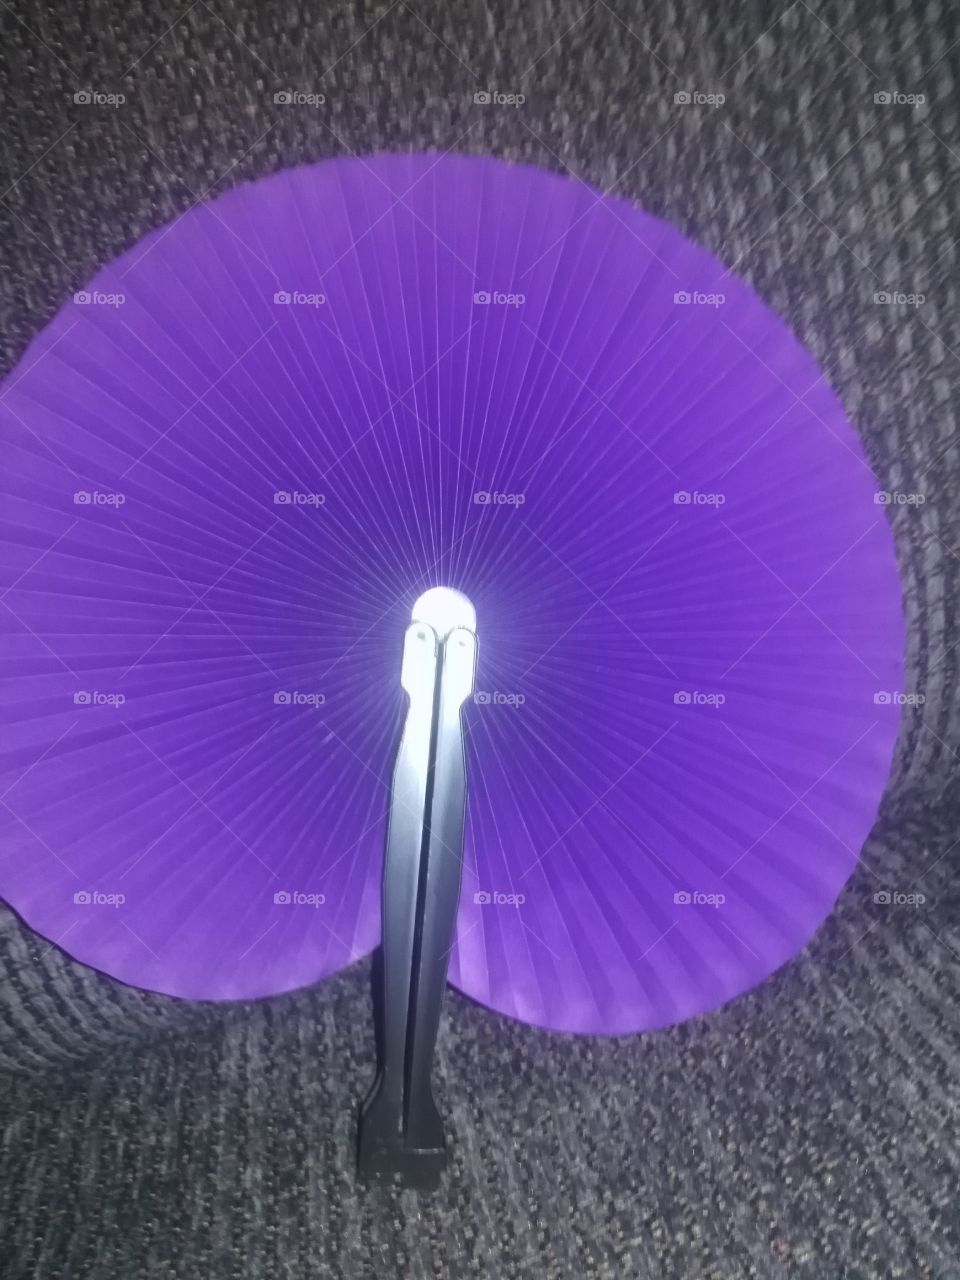 perfect purple